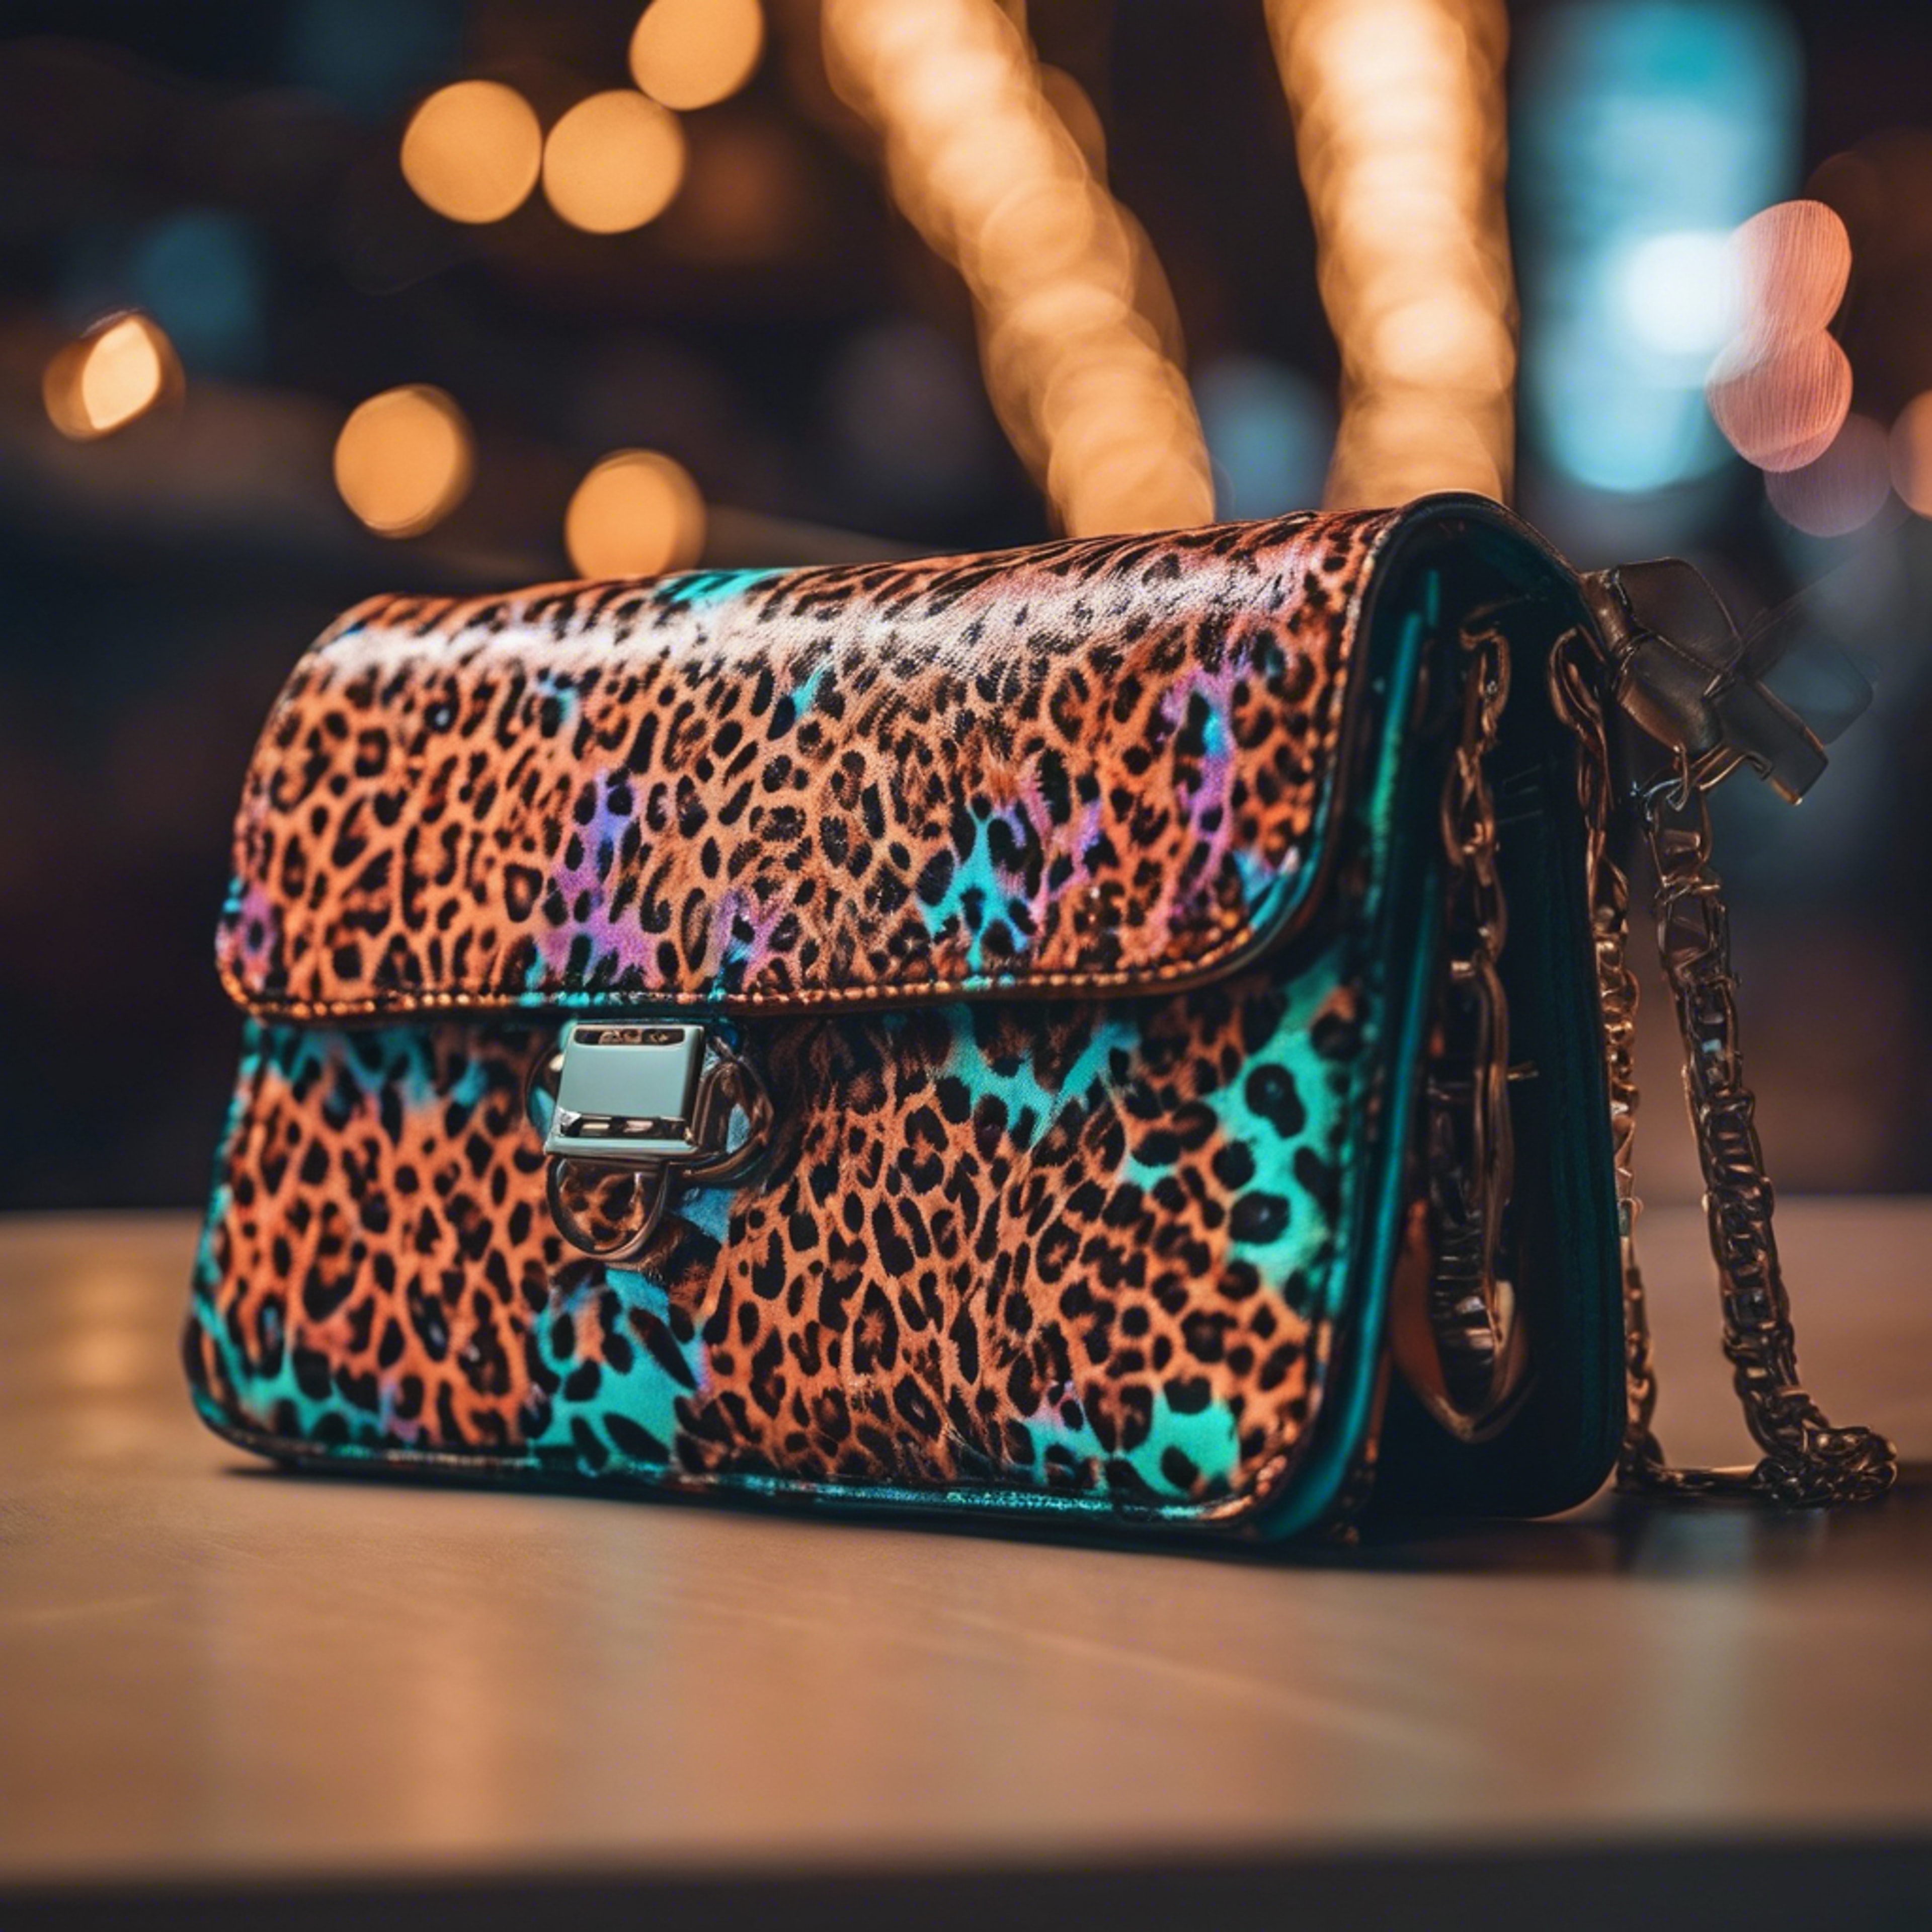 A trendy woman's clutch purse designed with a neon cheetah print. Wallpaper[f4914fc9eb0f44b6b115]